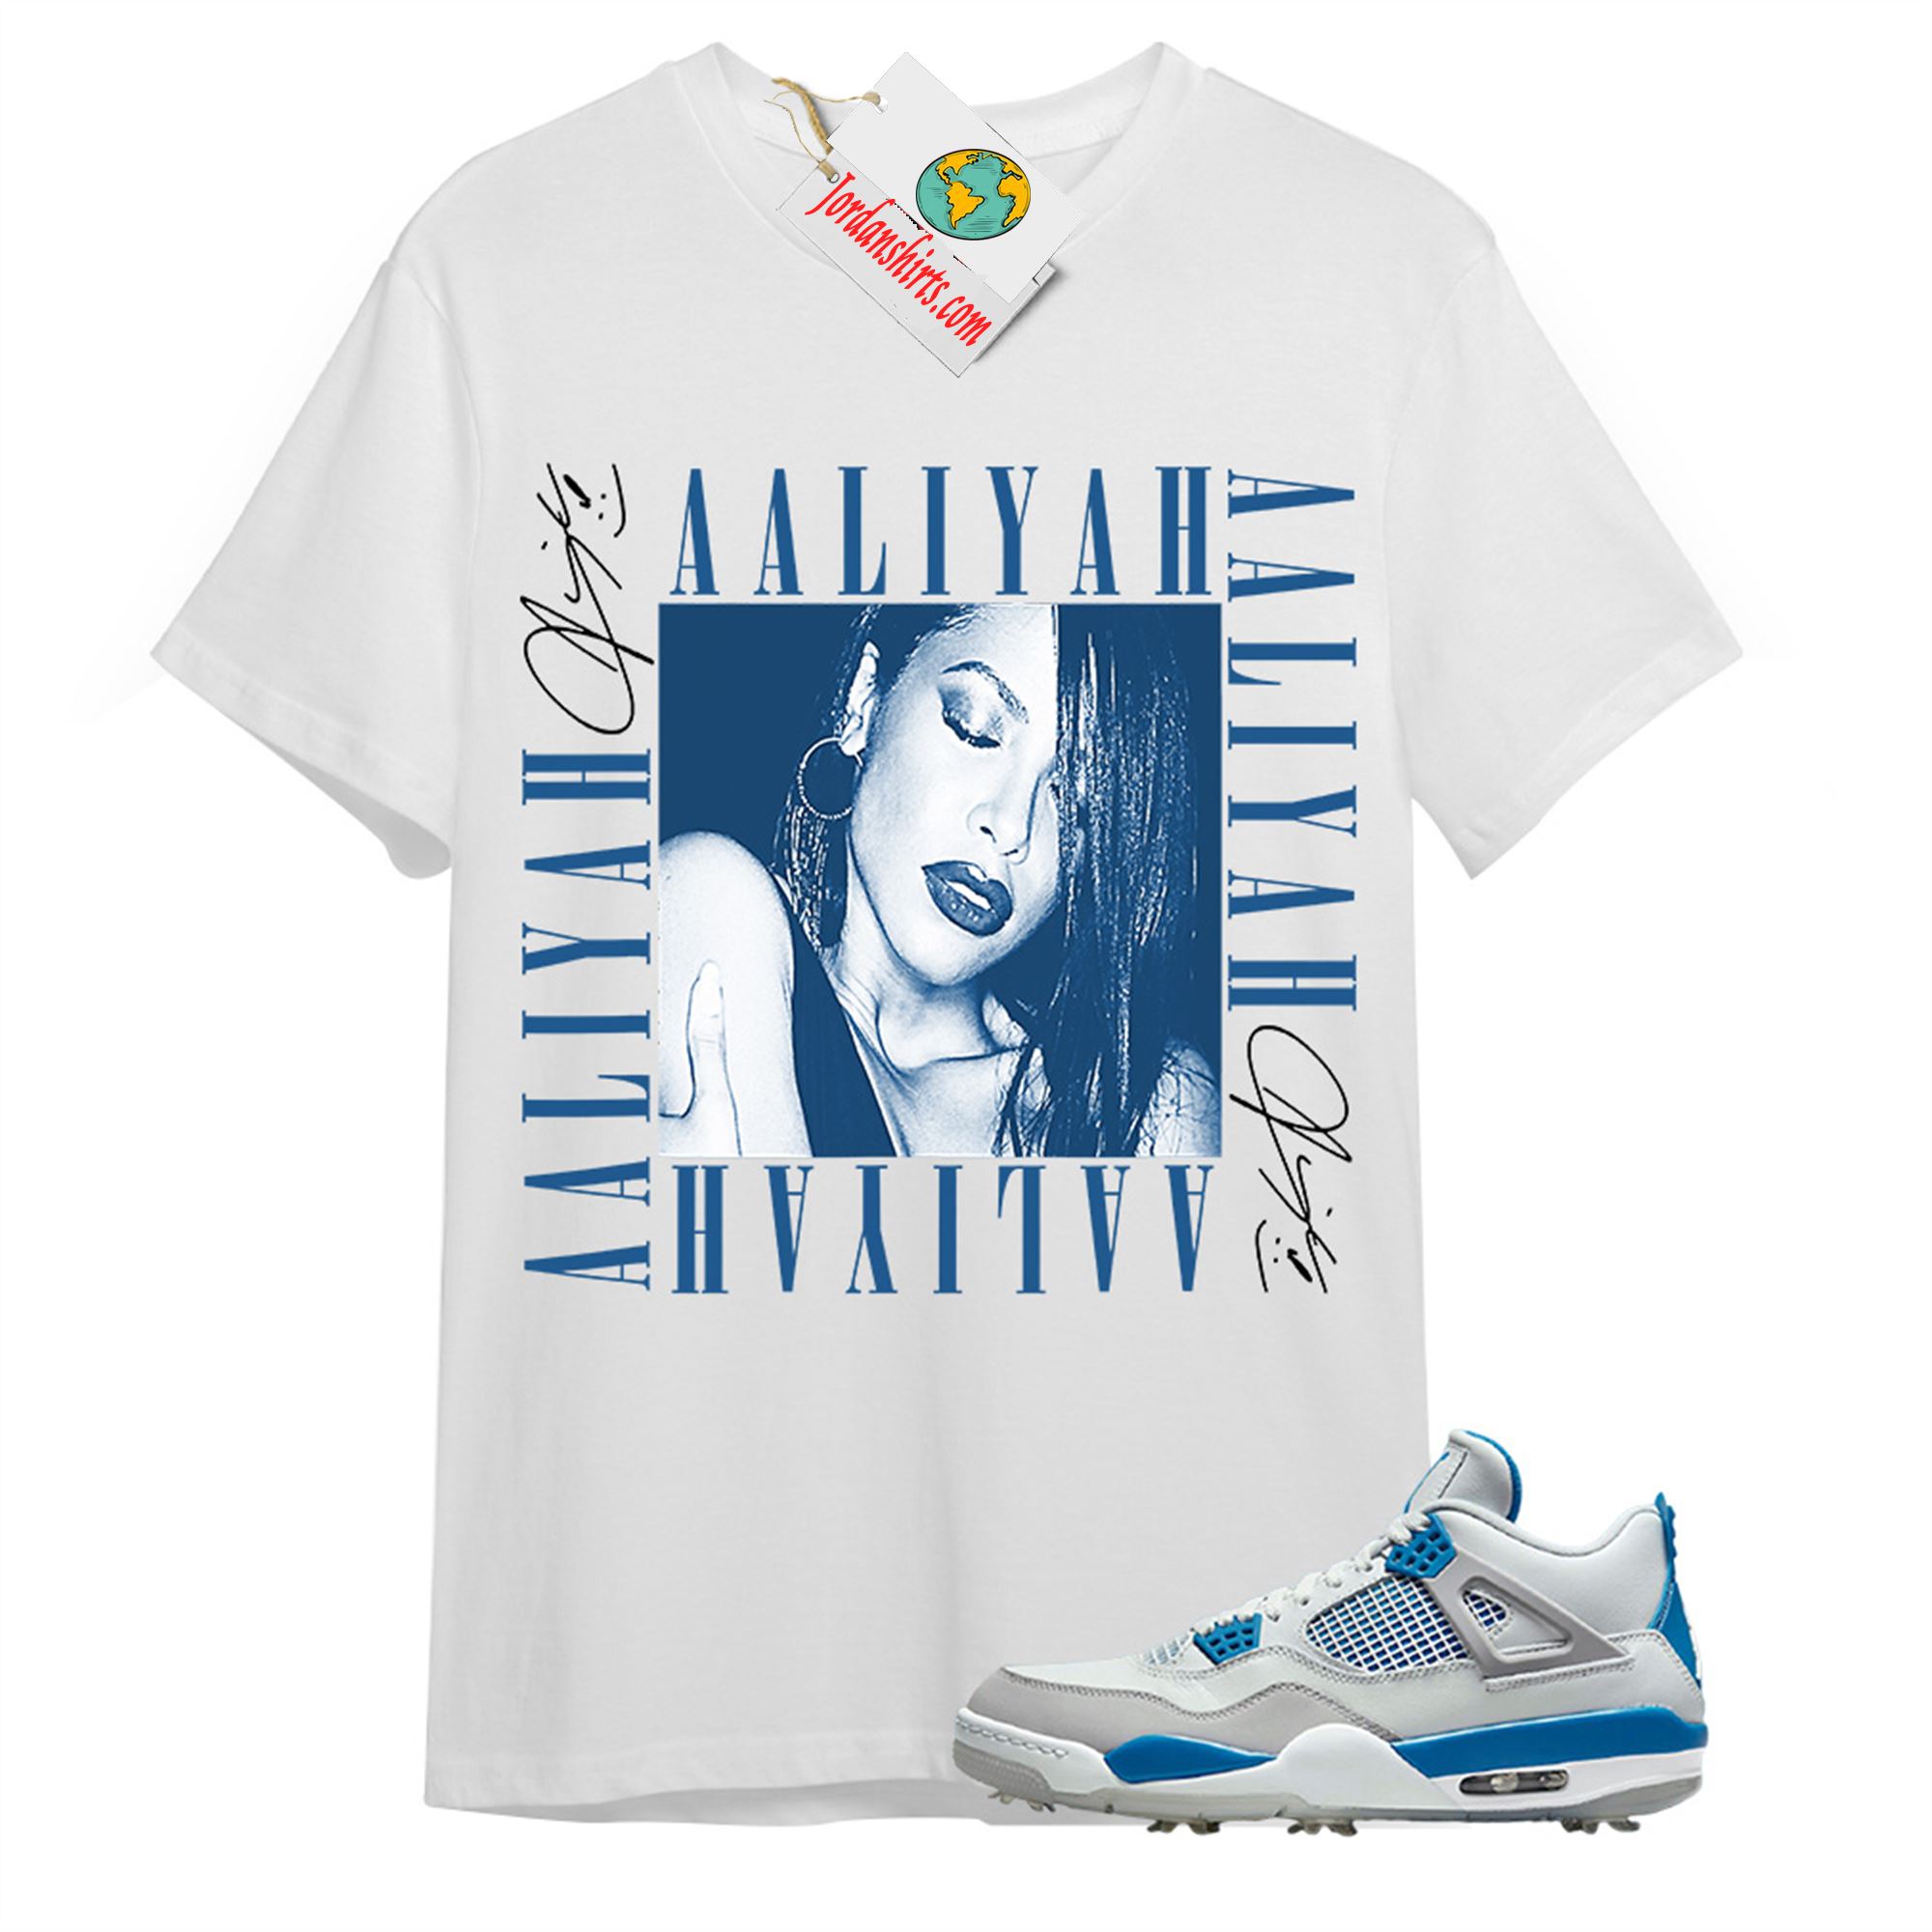 Jordan 4 Shirt, Aaliyah Box White T-shirt Air Jordan 4 Golf Military Blue 4s Plus Size Up To 5xl